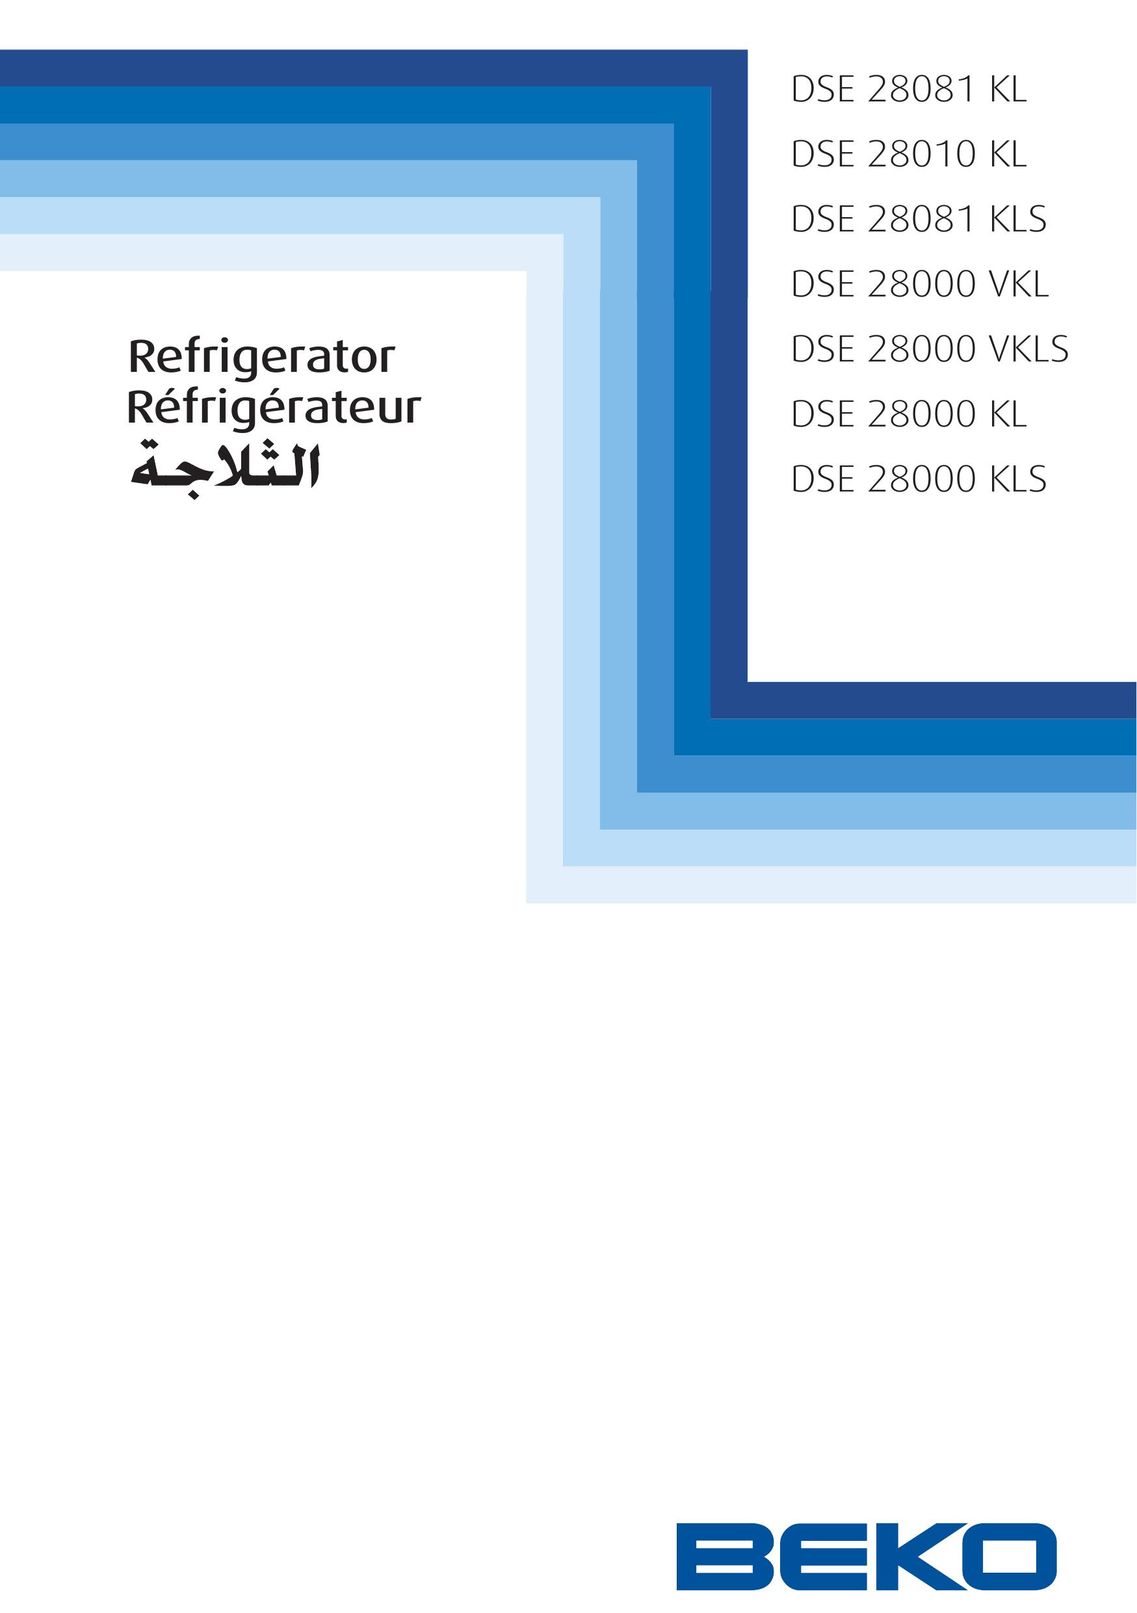 Beko DSE 28081 KLS Freezer User Manual